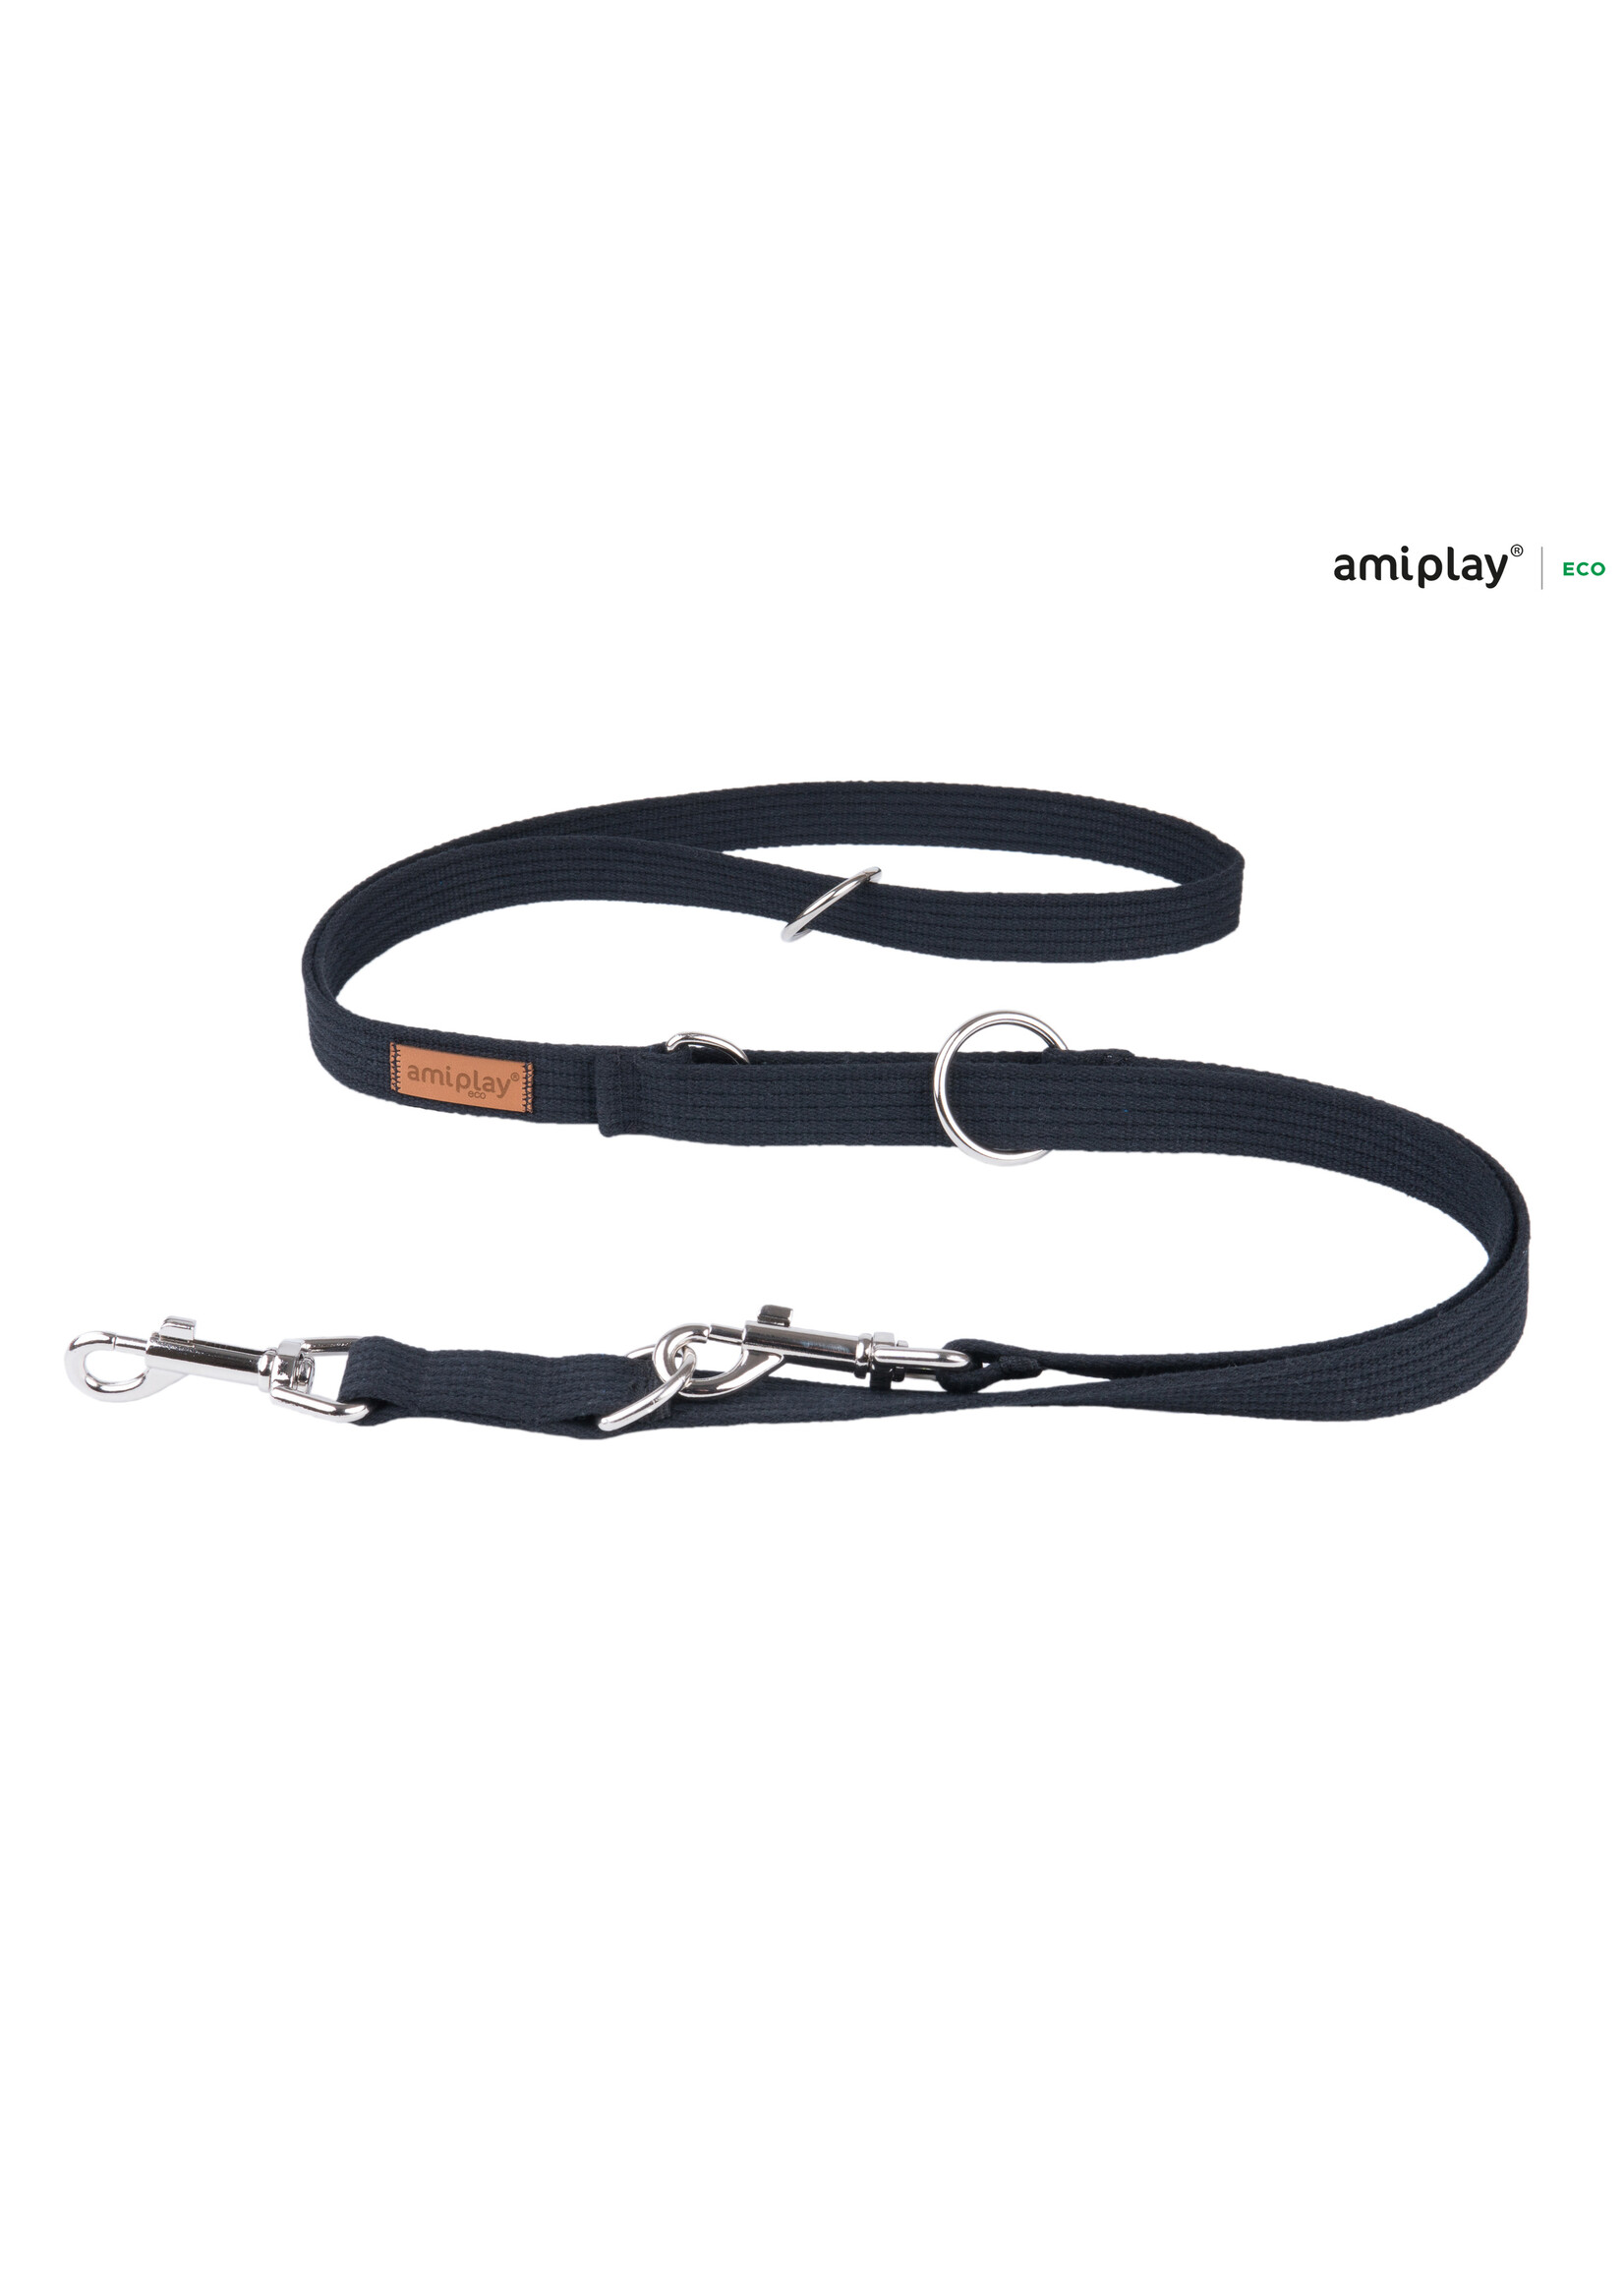 Amiplay Leiband verstelbaar 6in1 Cotton zwart maat-M / 100-200x2cm